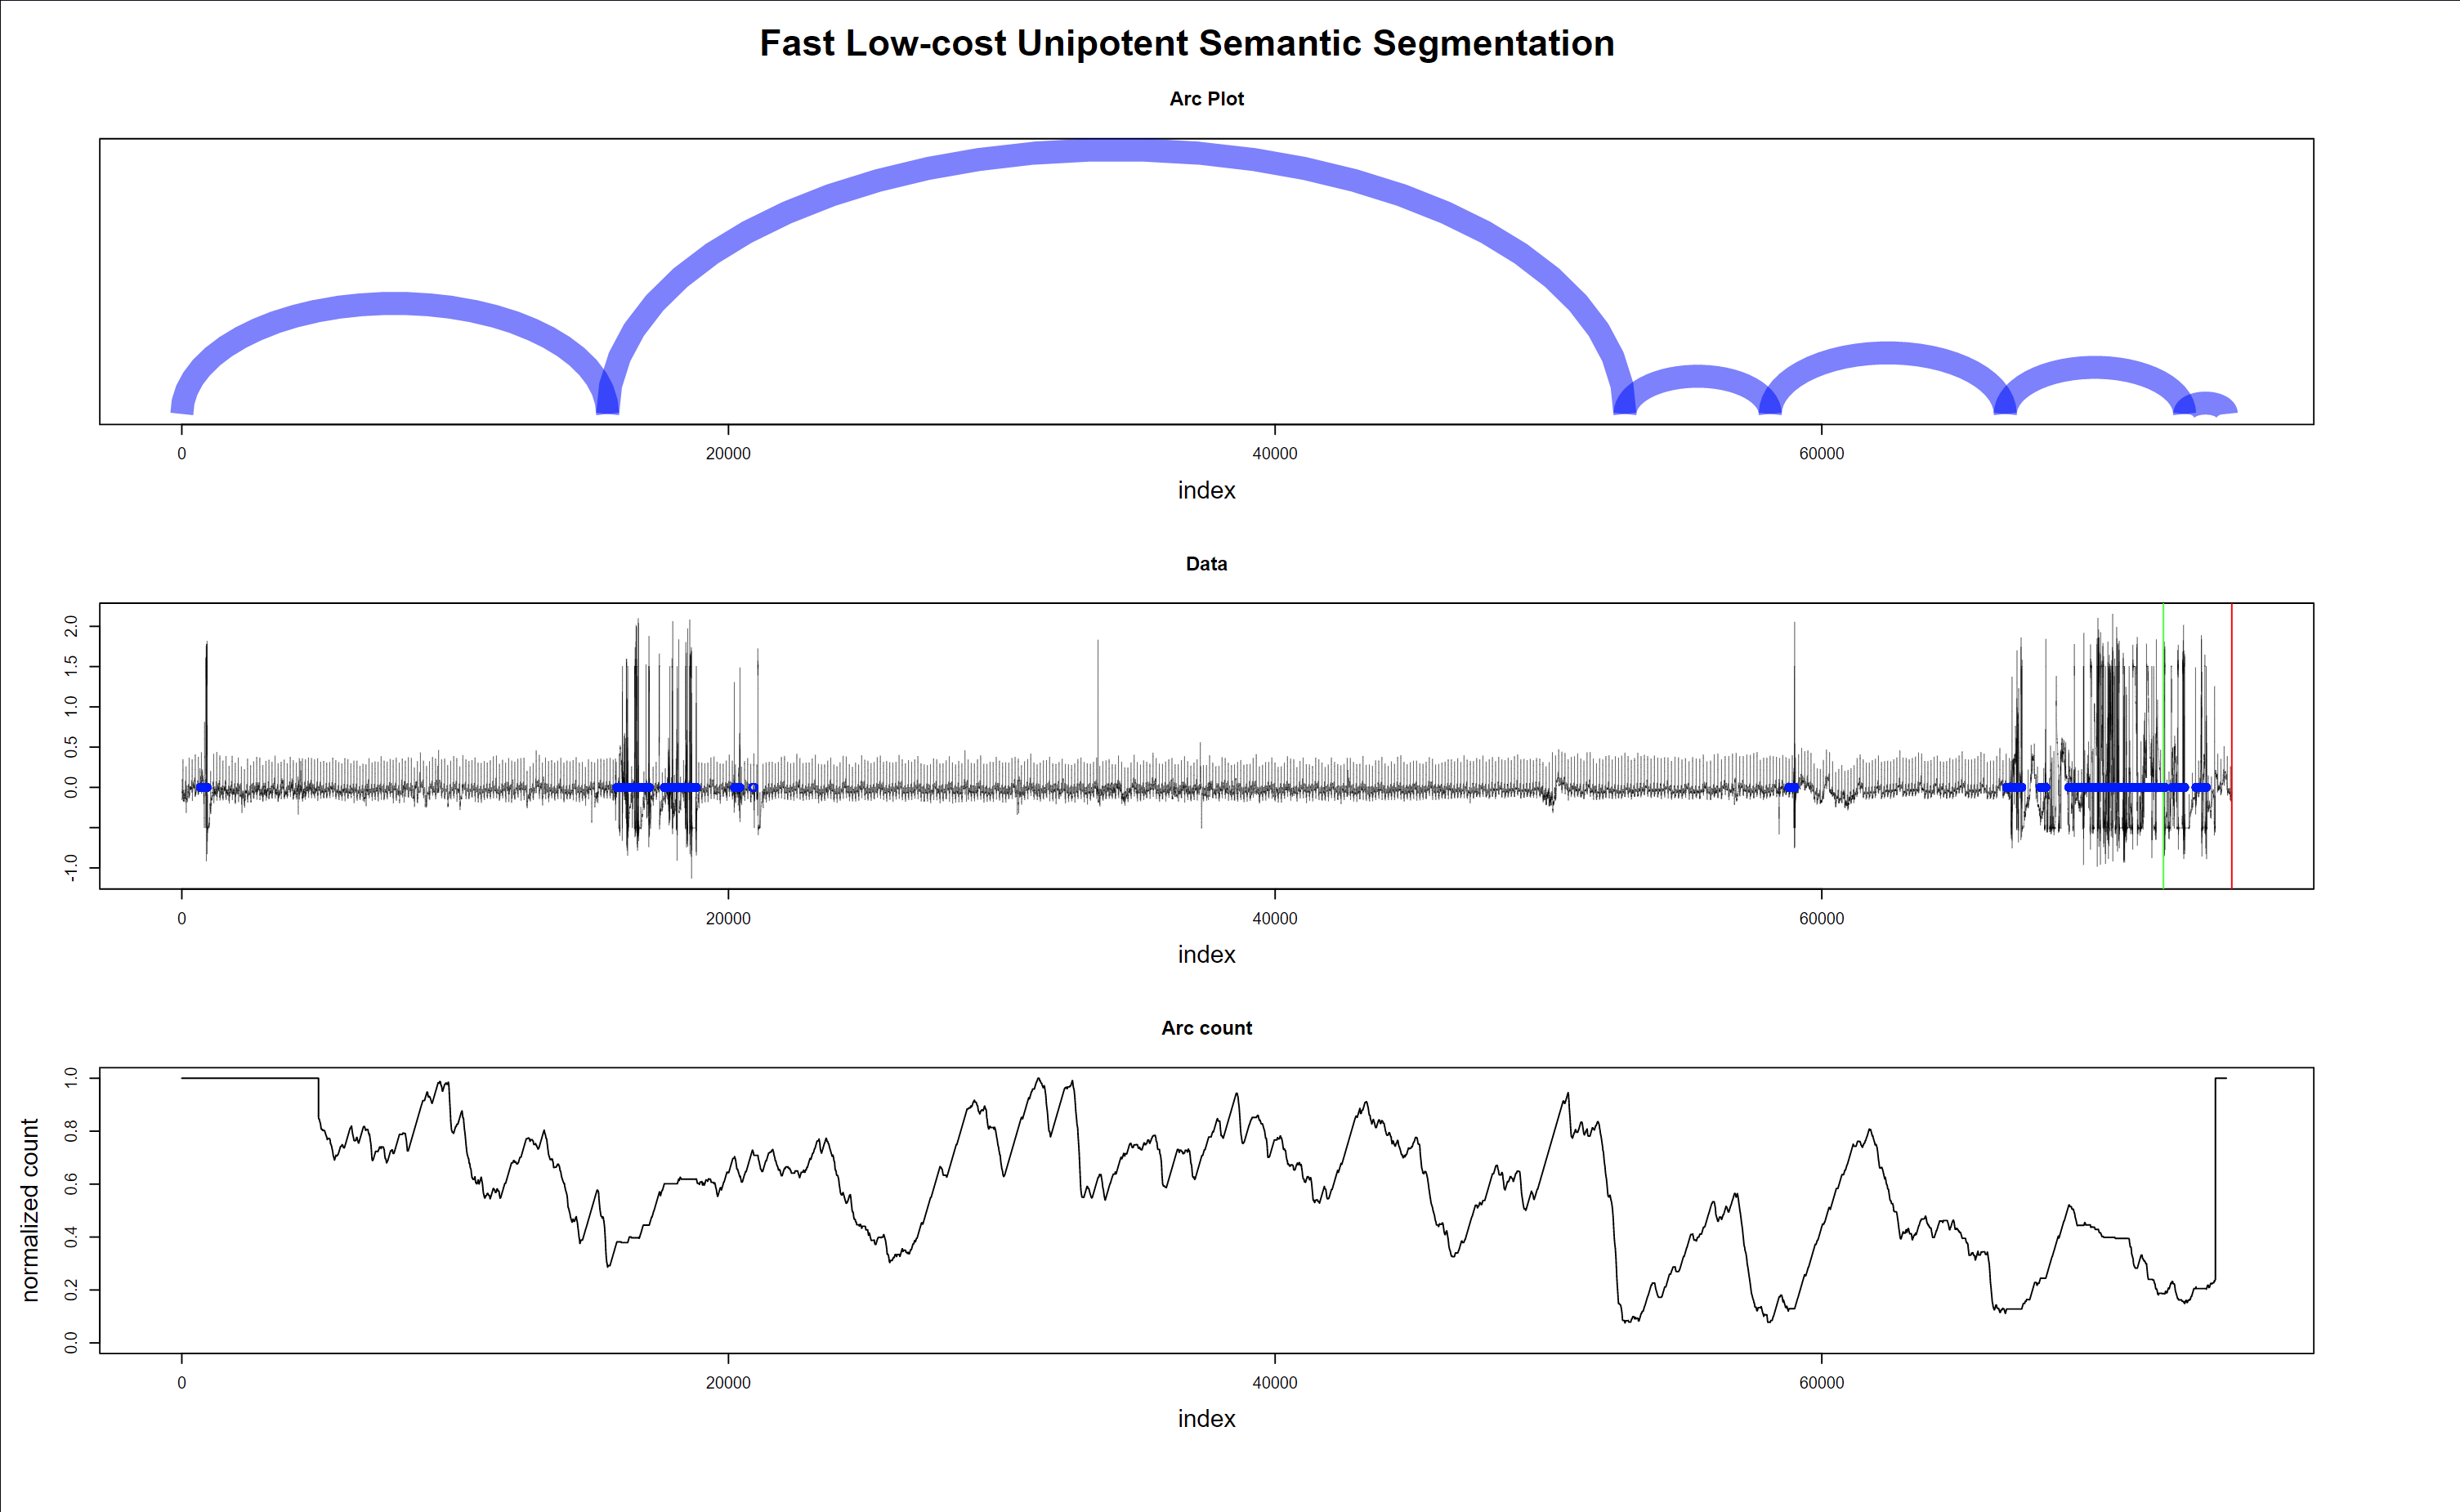 Figure 12 - Regime changes with noisy data - false alarm